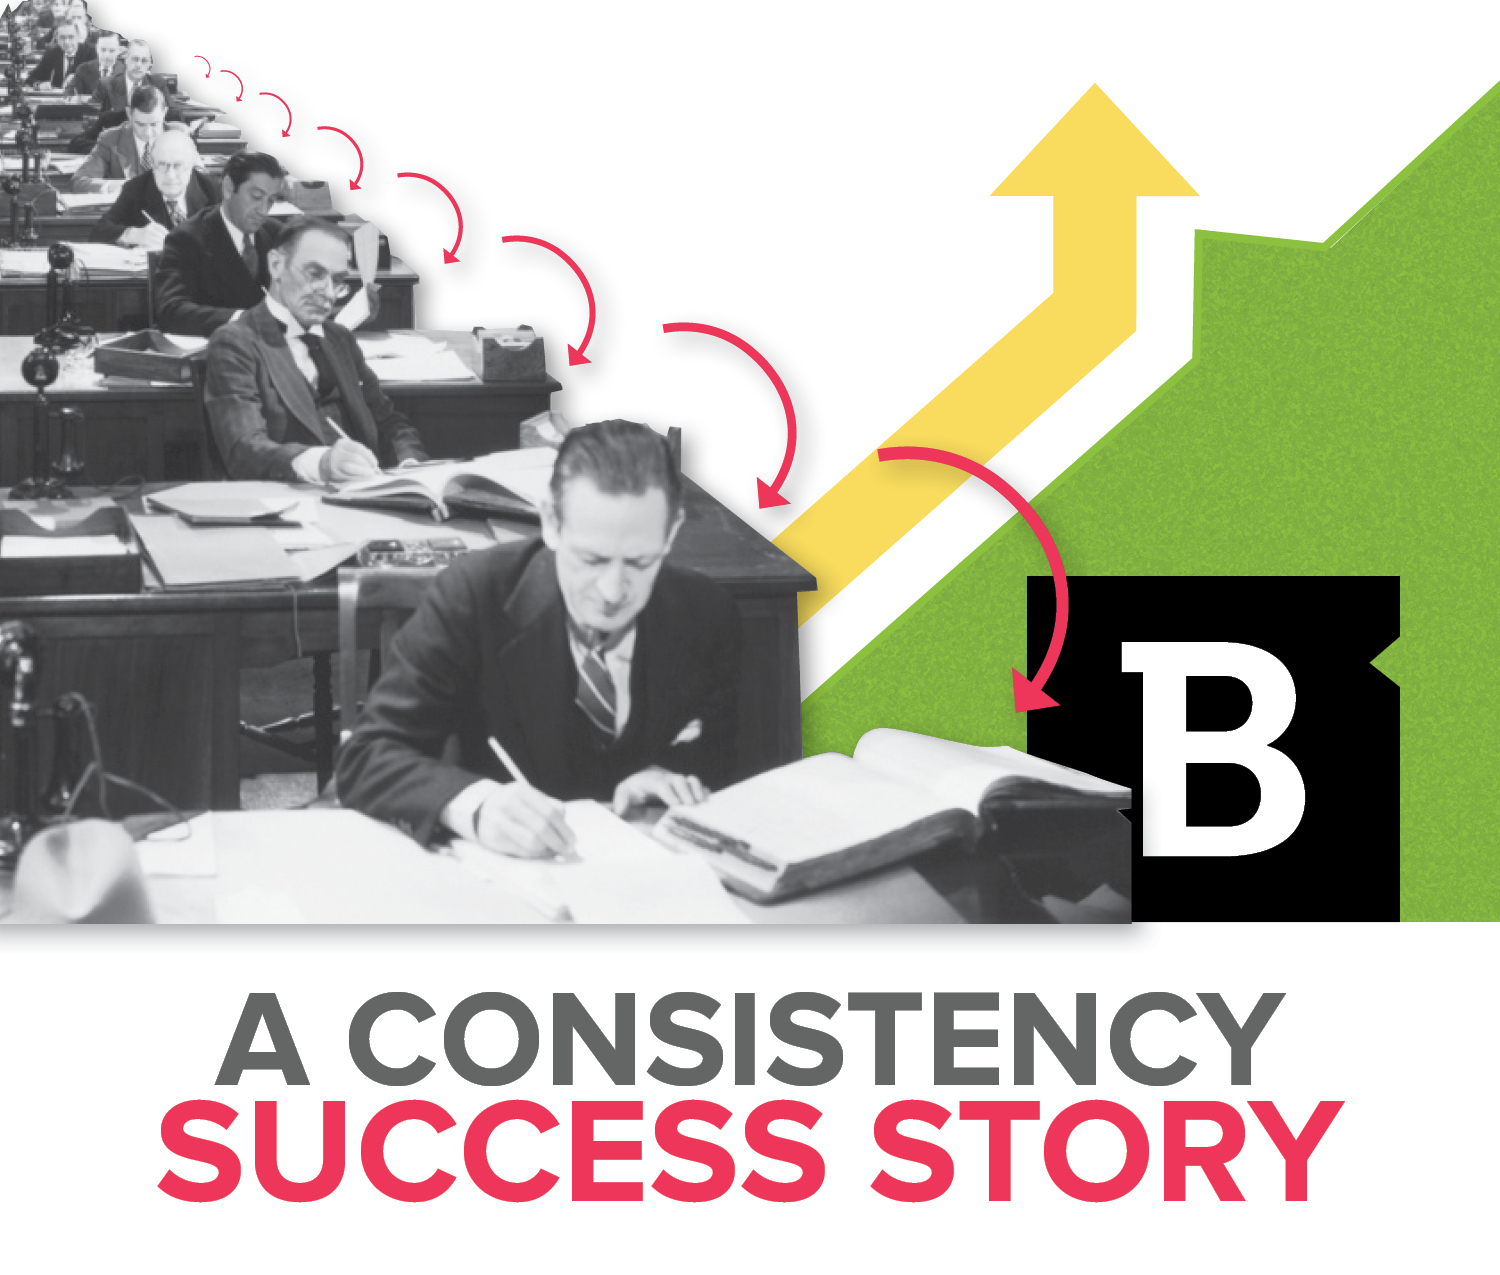 Brafton success story - Blogging consistency drives success